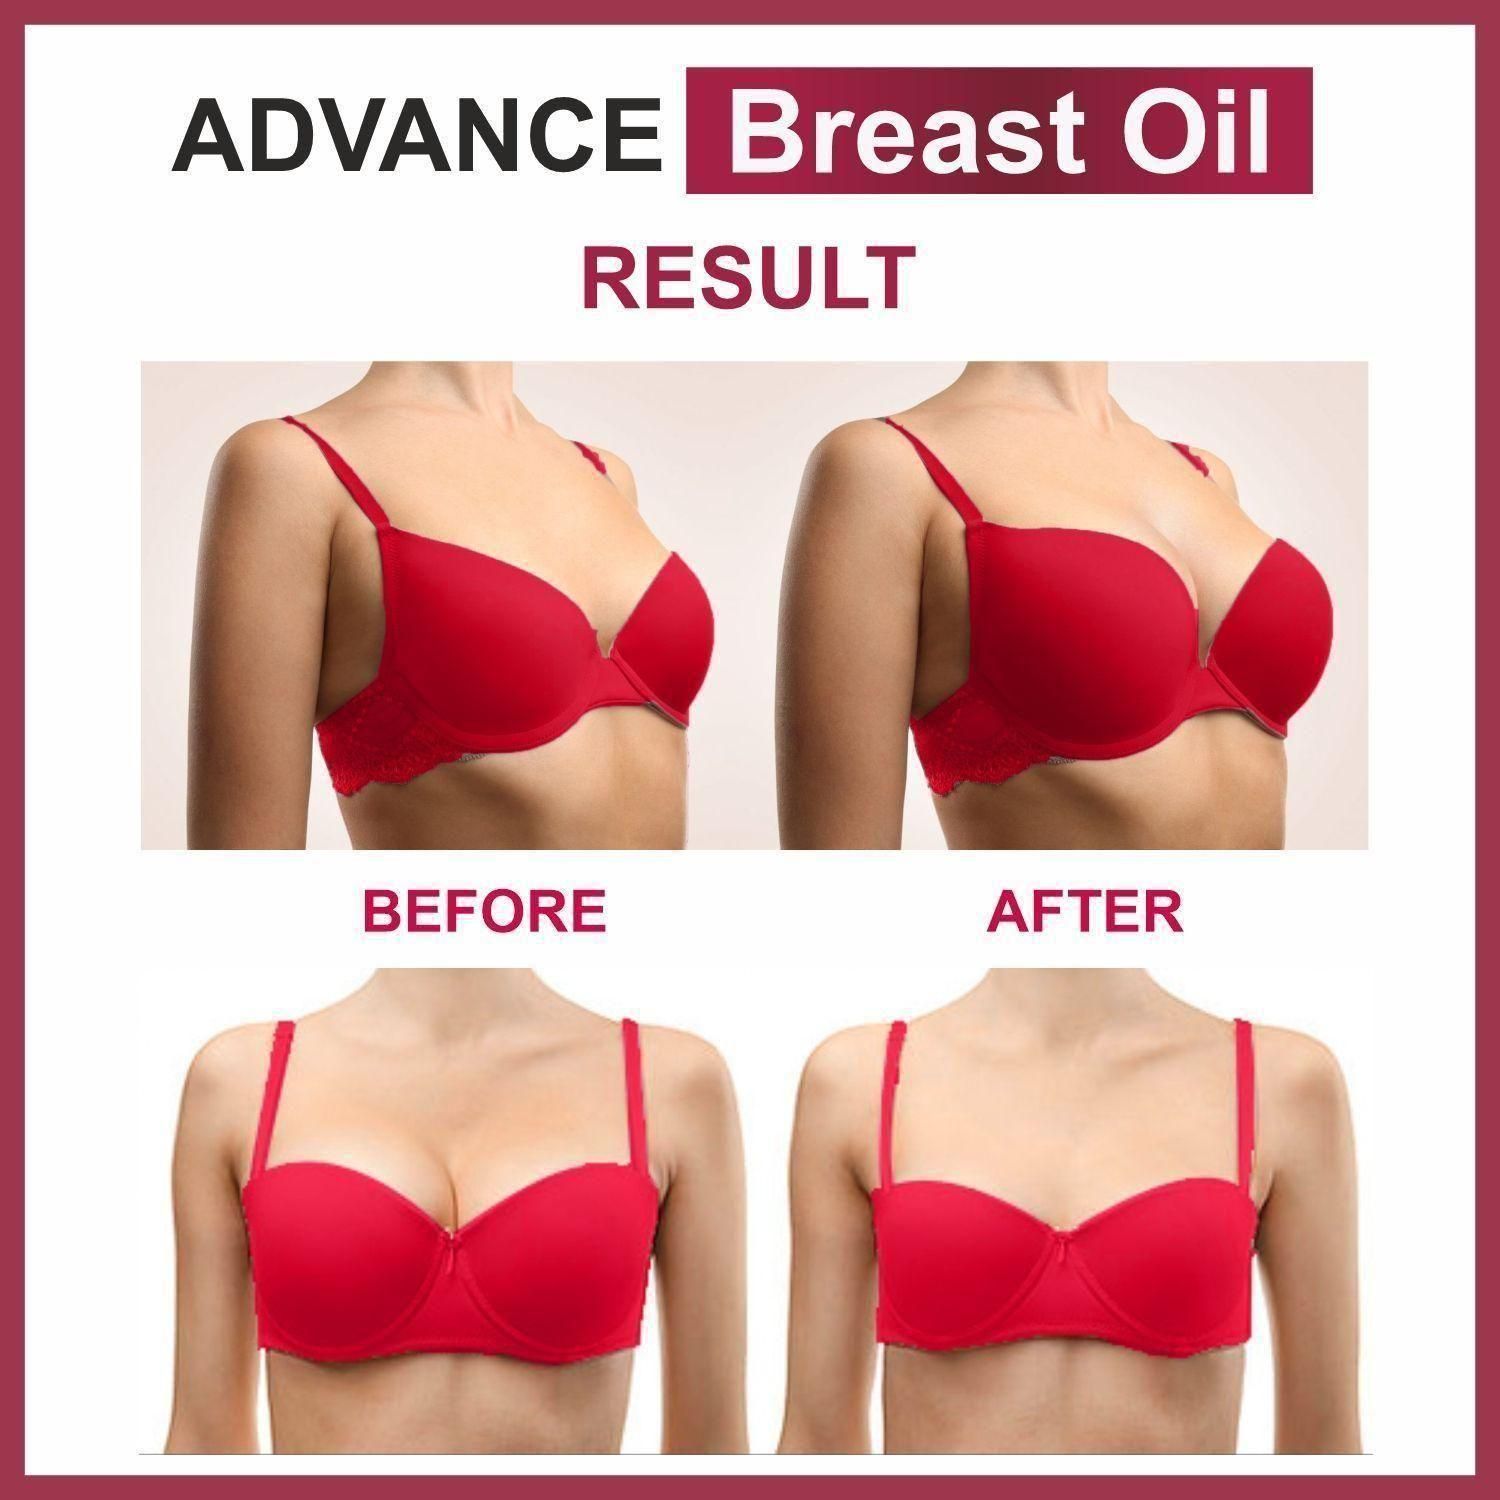 Oilanic Advance Breast Oil - Deal IND.